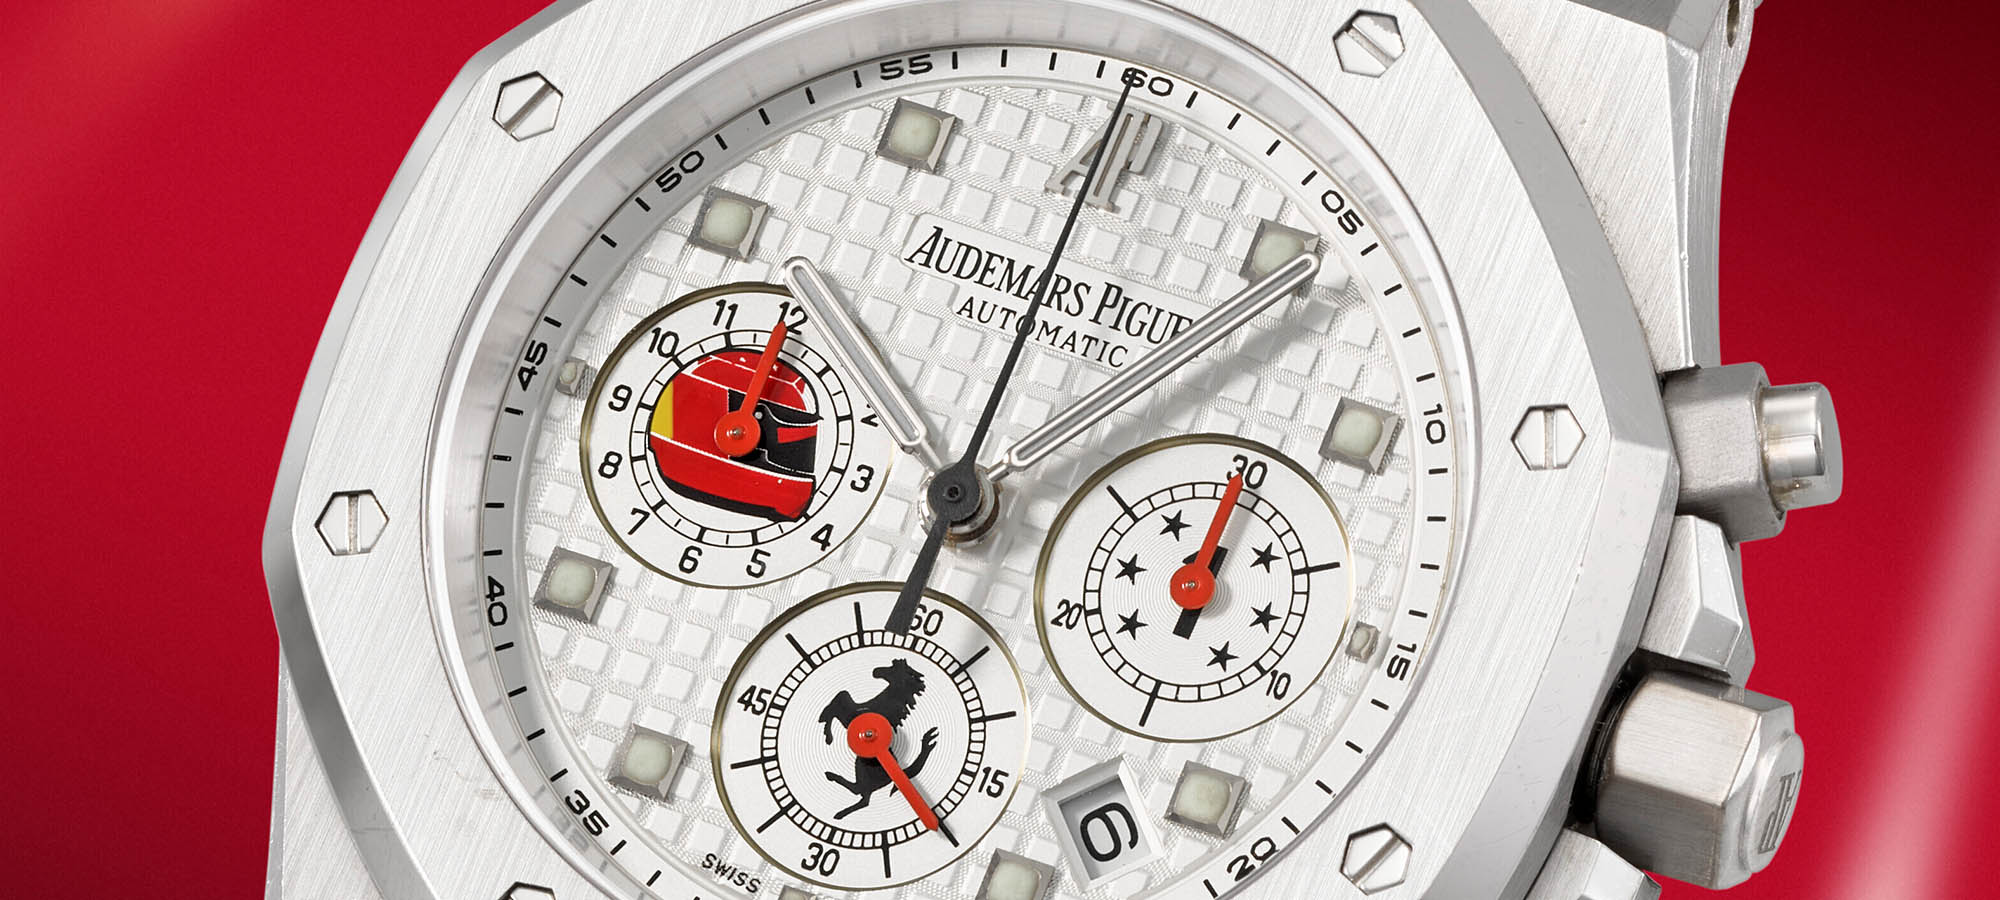 Christie’s Is Set To Auction F1 Legend Michael Schumacher’s Timepiece Collection